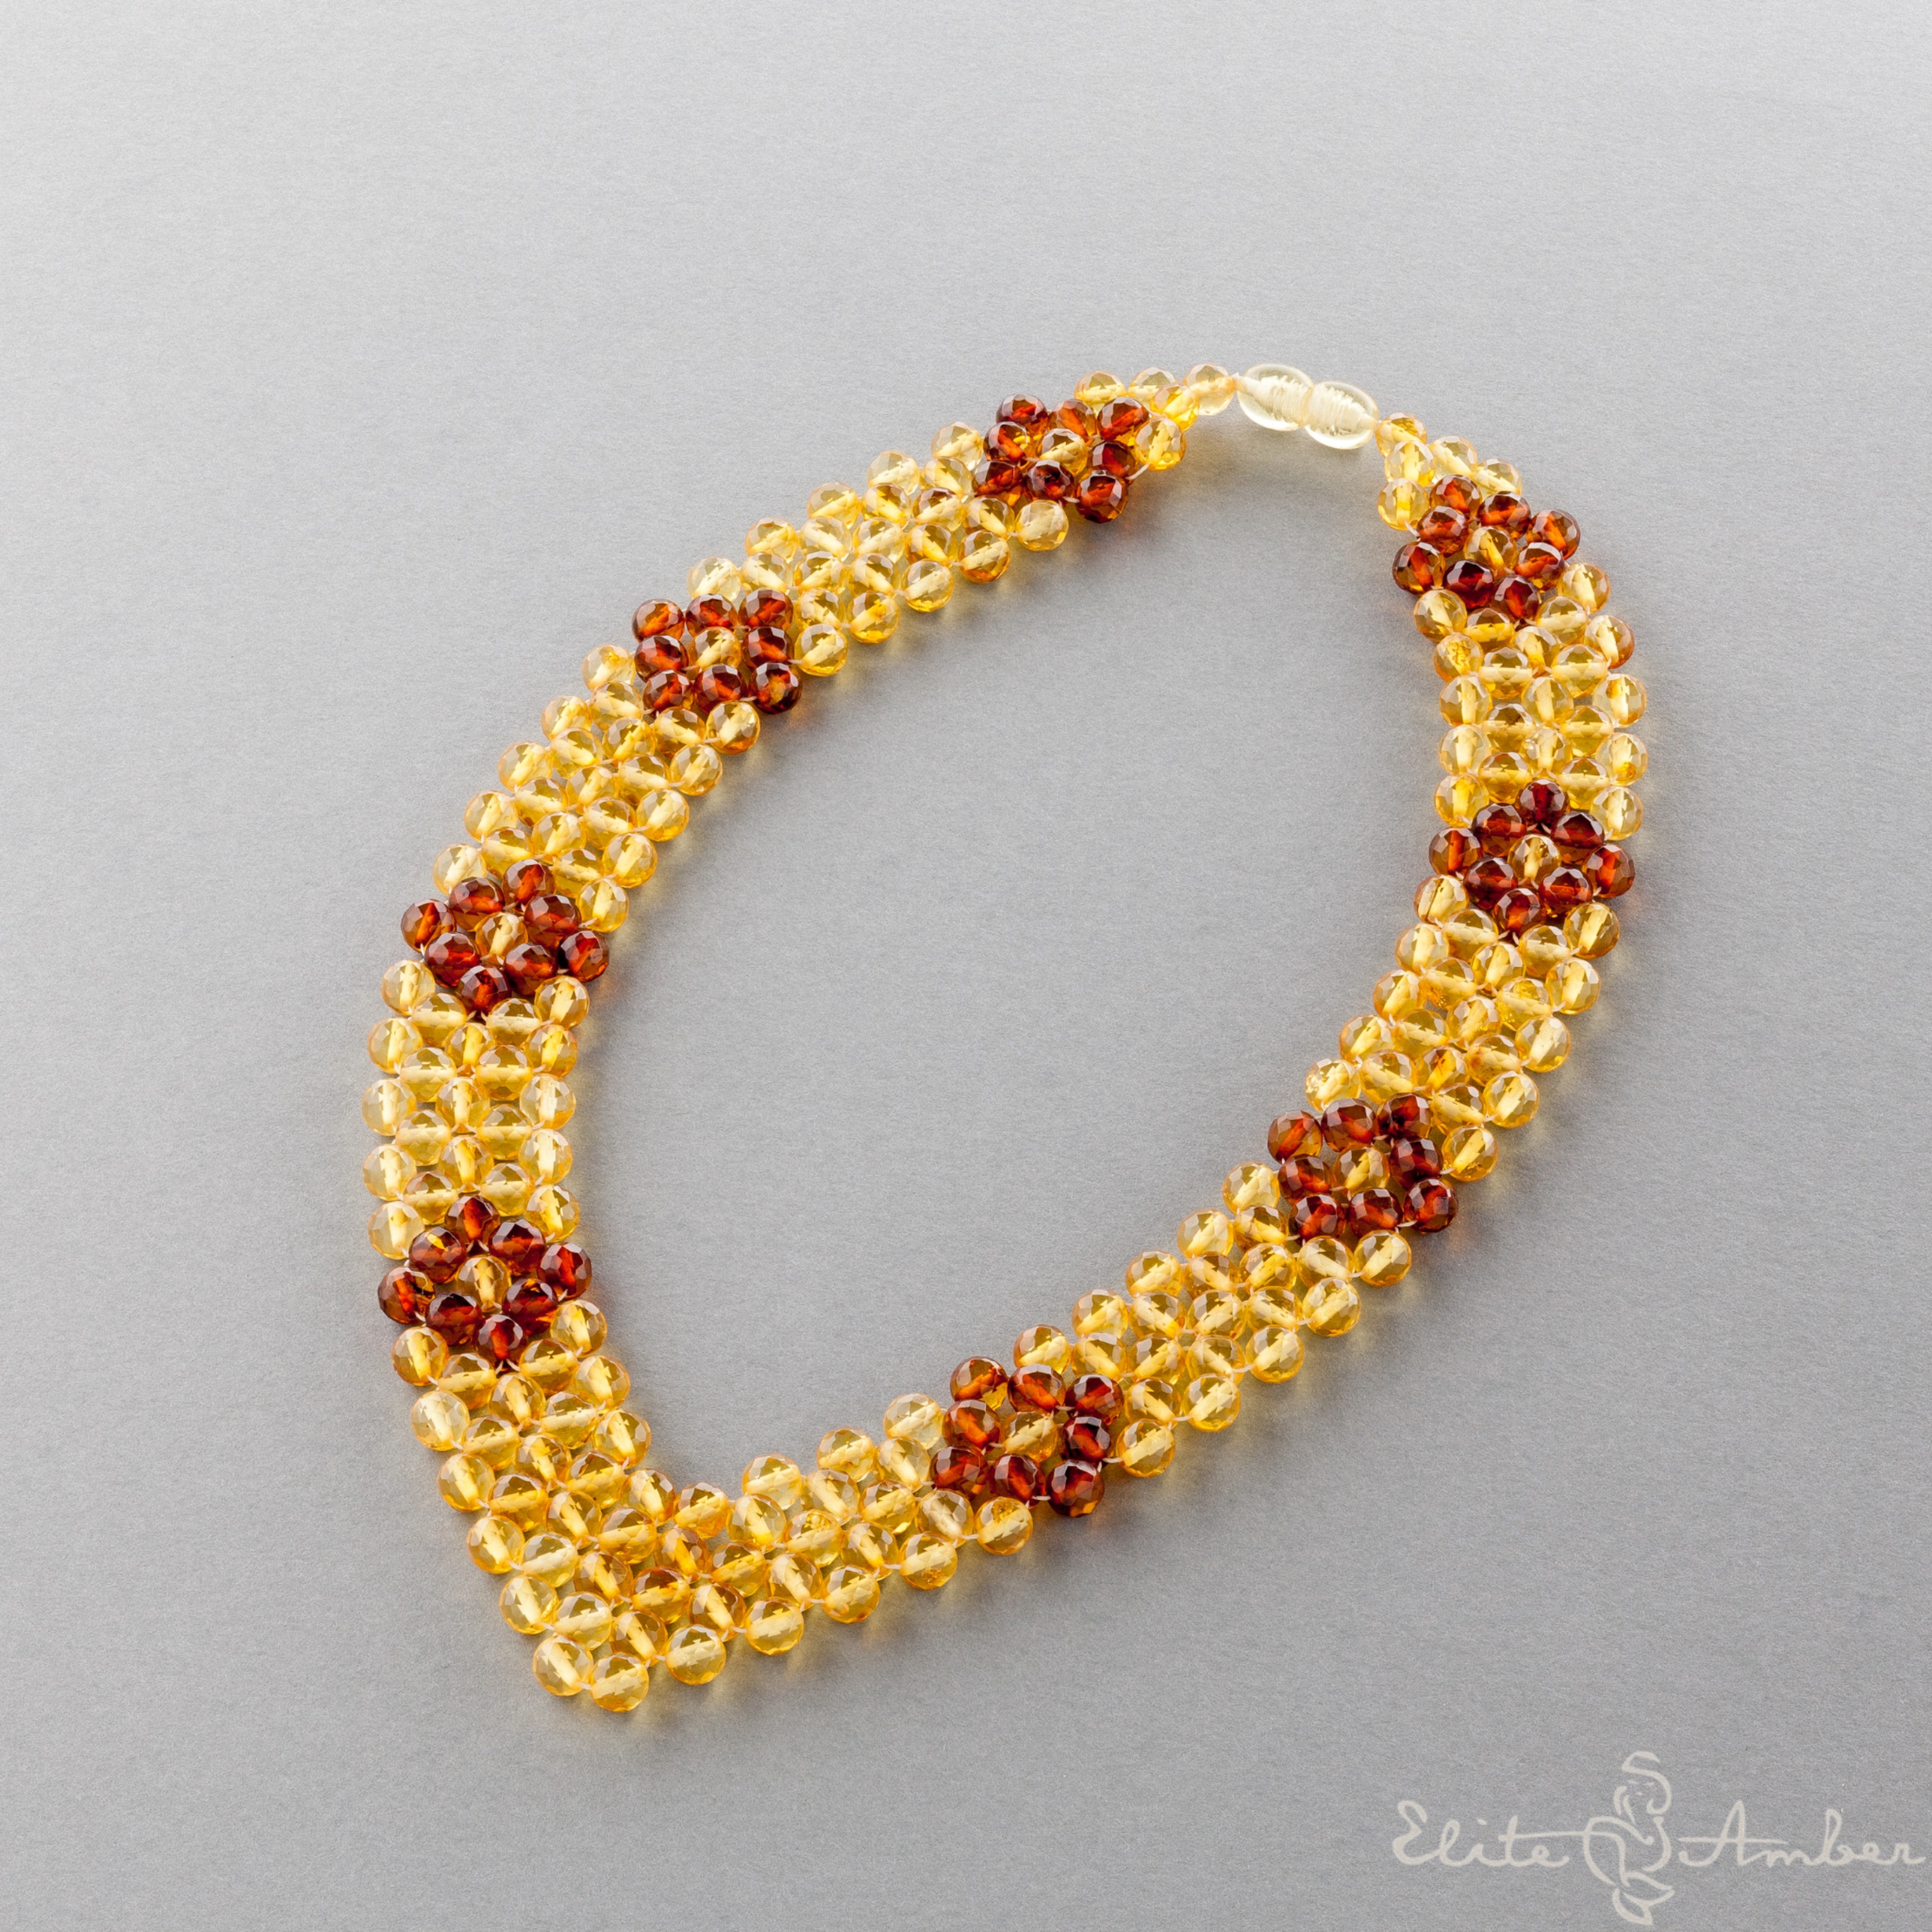 Amber necklace "Princess honey flowers"